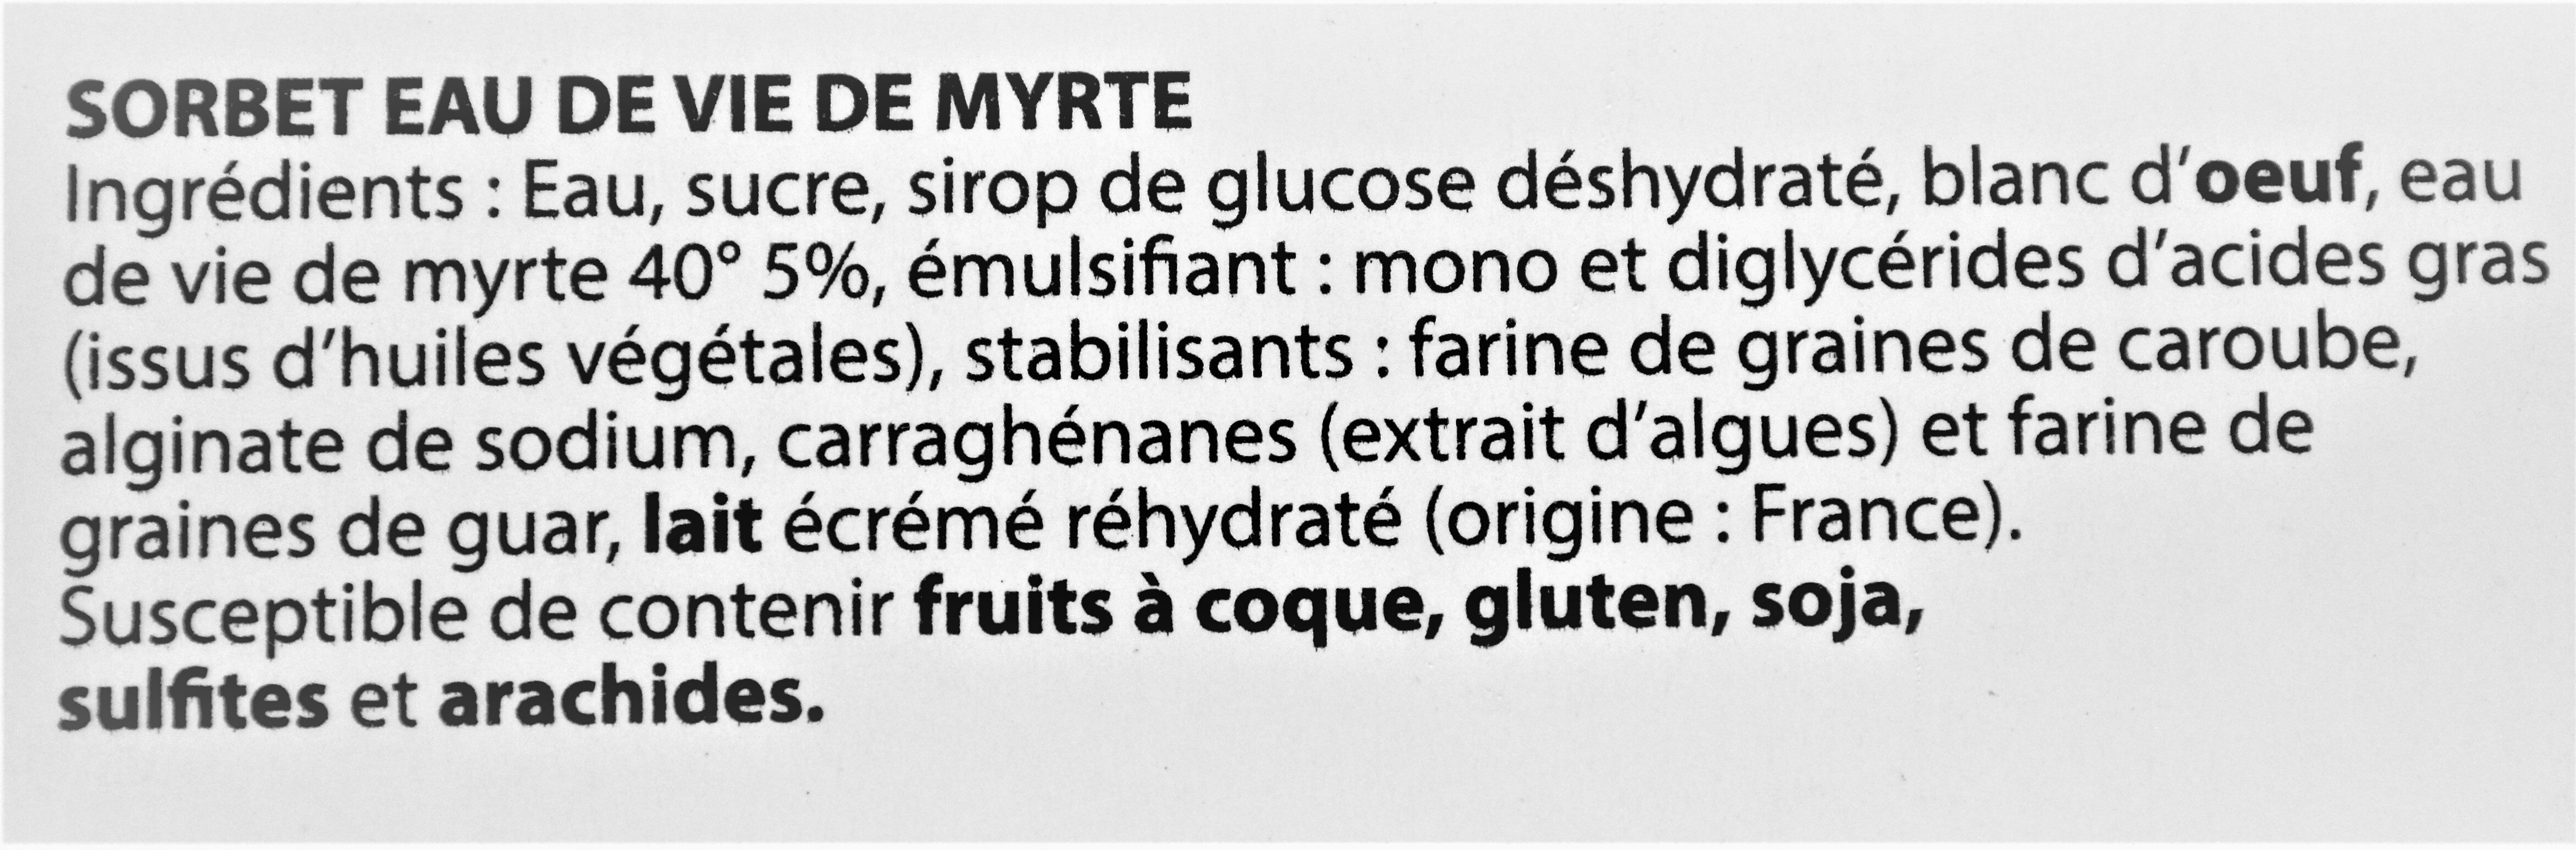 Sorbet Eau de vie de Myrte - Ingredients - fr